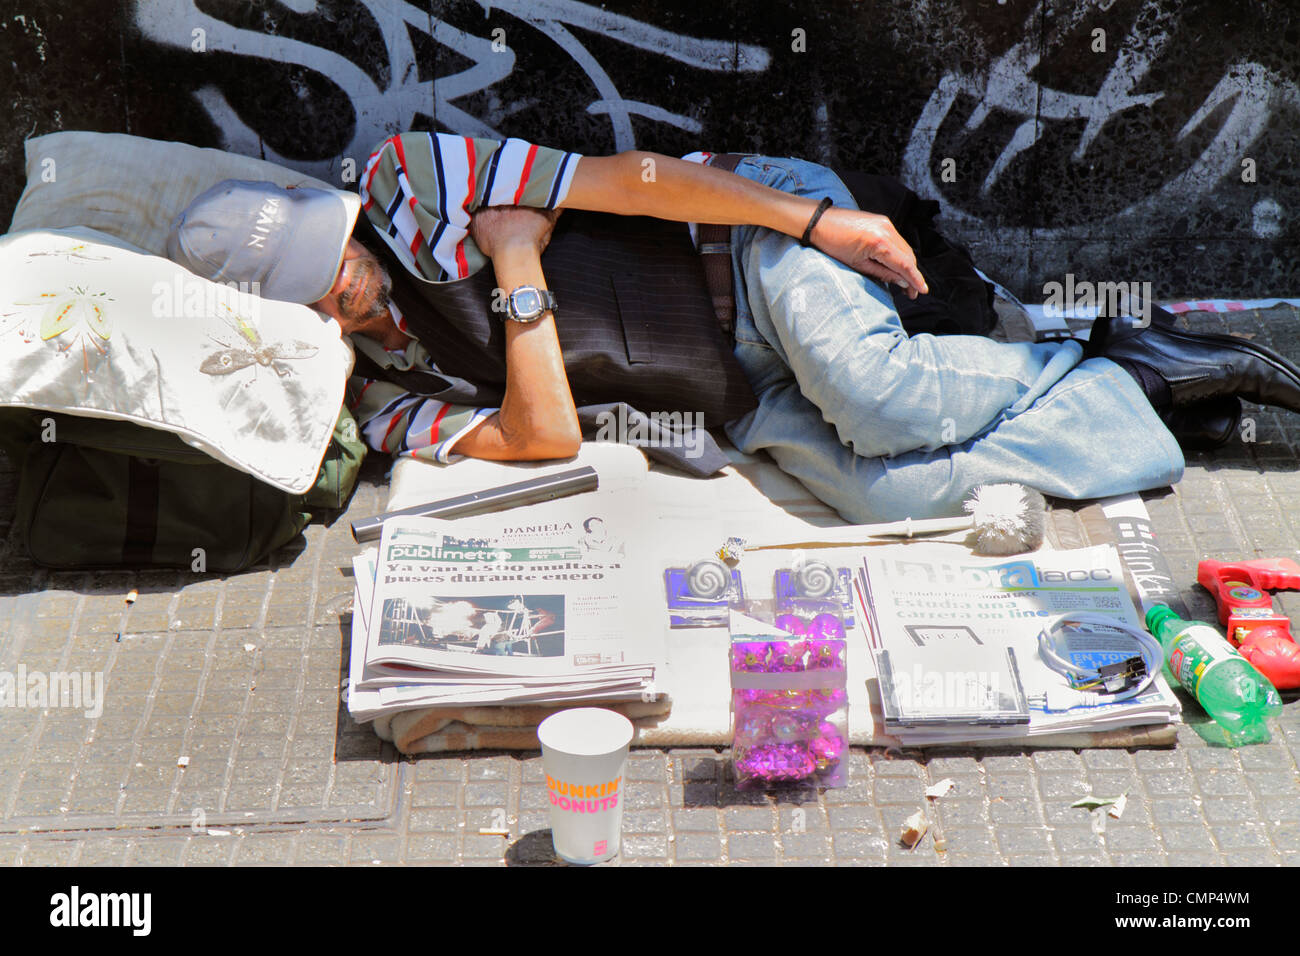 Santiago Chile,Providencia,Avenida Libertador Bernardo O'Higgins,street,sidewalk,Hispanic man men male adult adults,homeless,sleeping on street,newspa Stock Photo